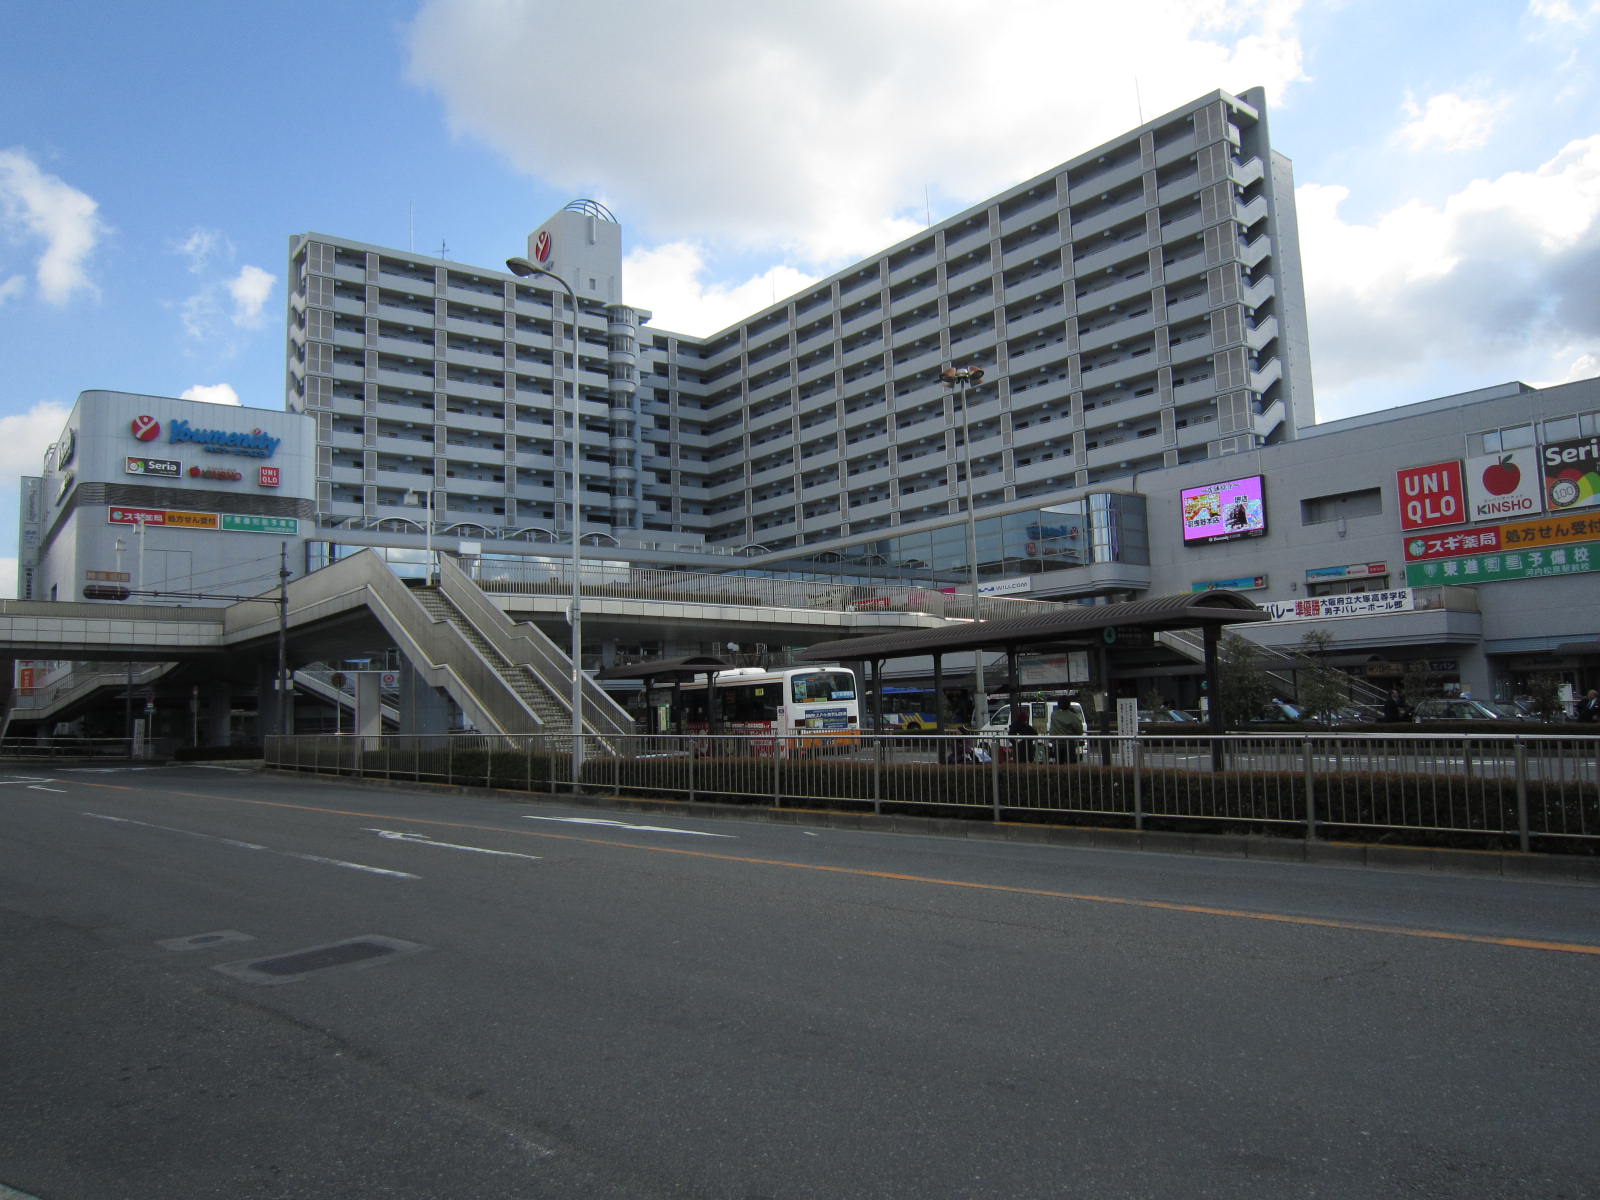 Shopping centre. Dream 1182m until sanity Matsubara (shopping center)